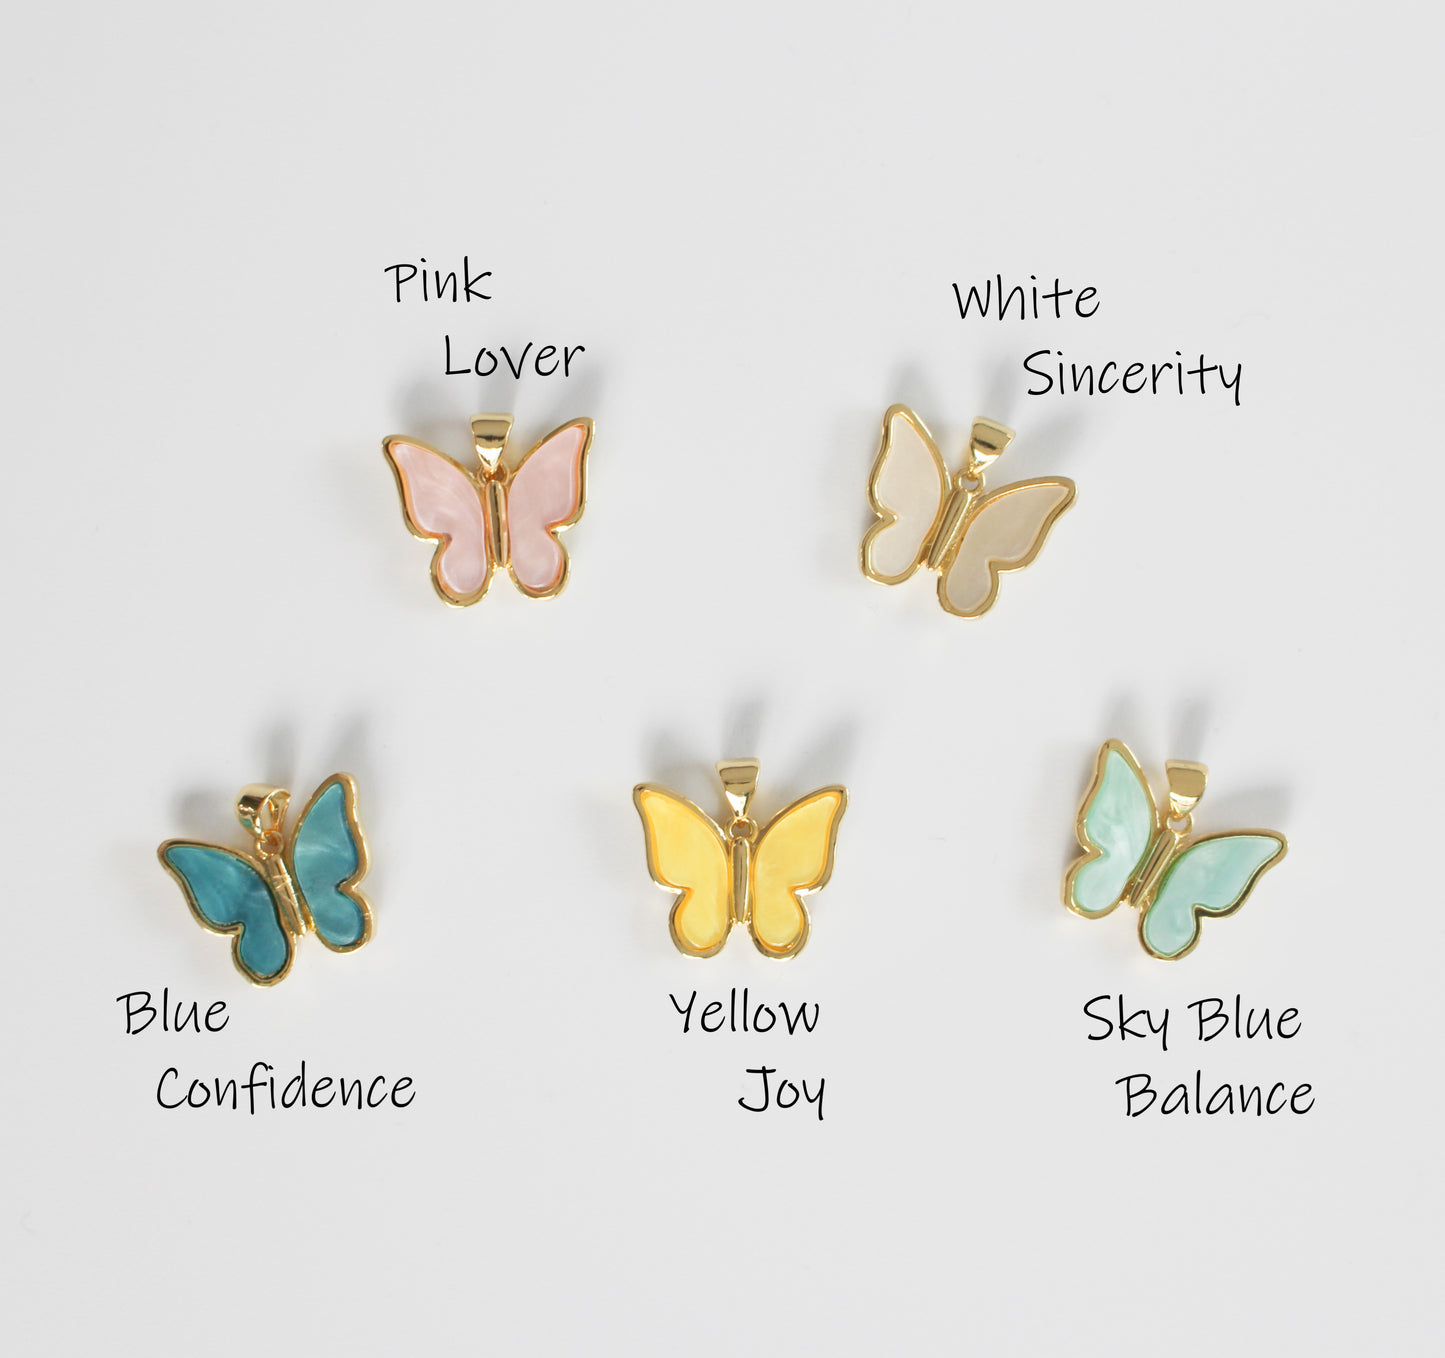 Dainty mariposa - 14k Gold Filled Butterfly Pendant Necklace Charm Love Enamel